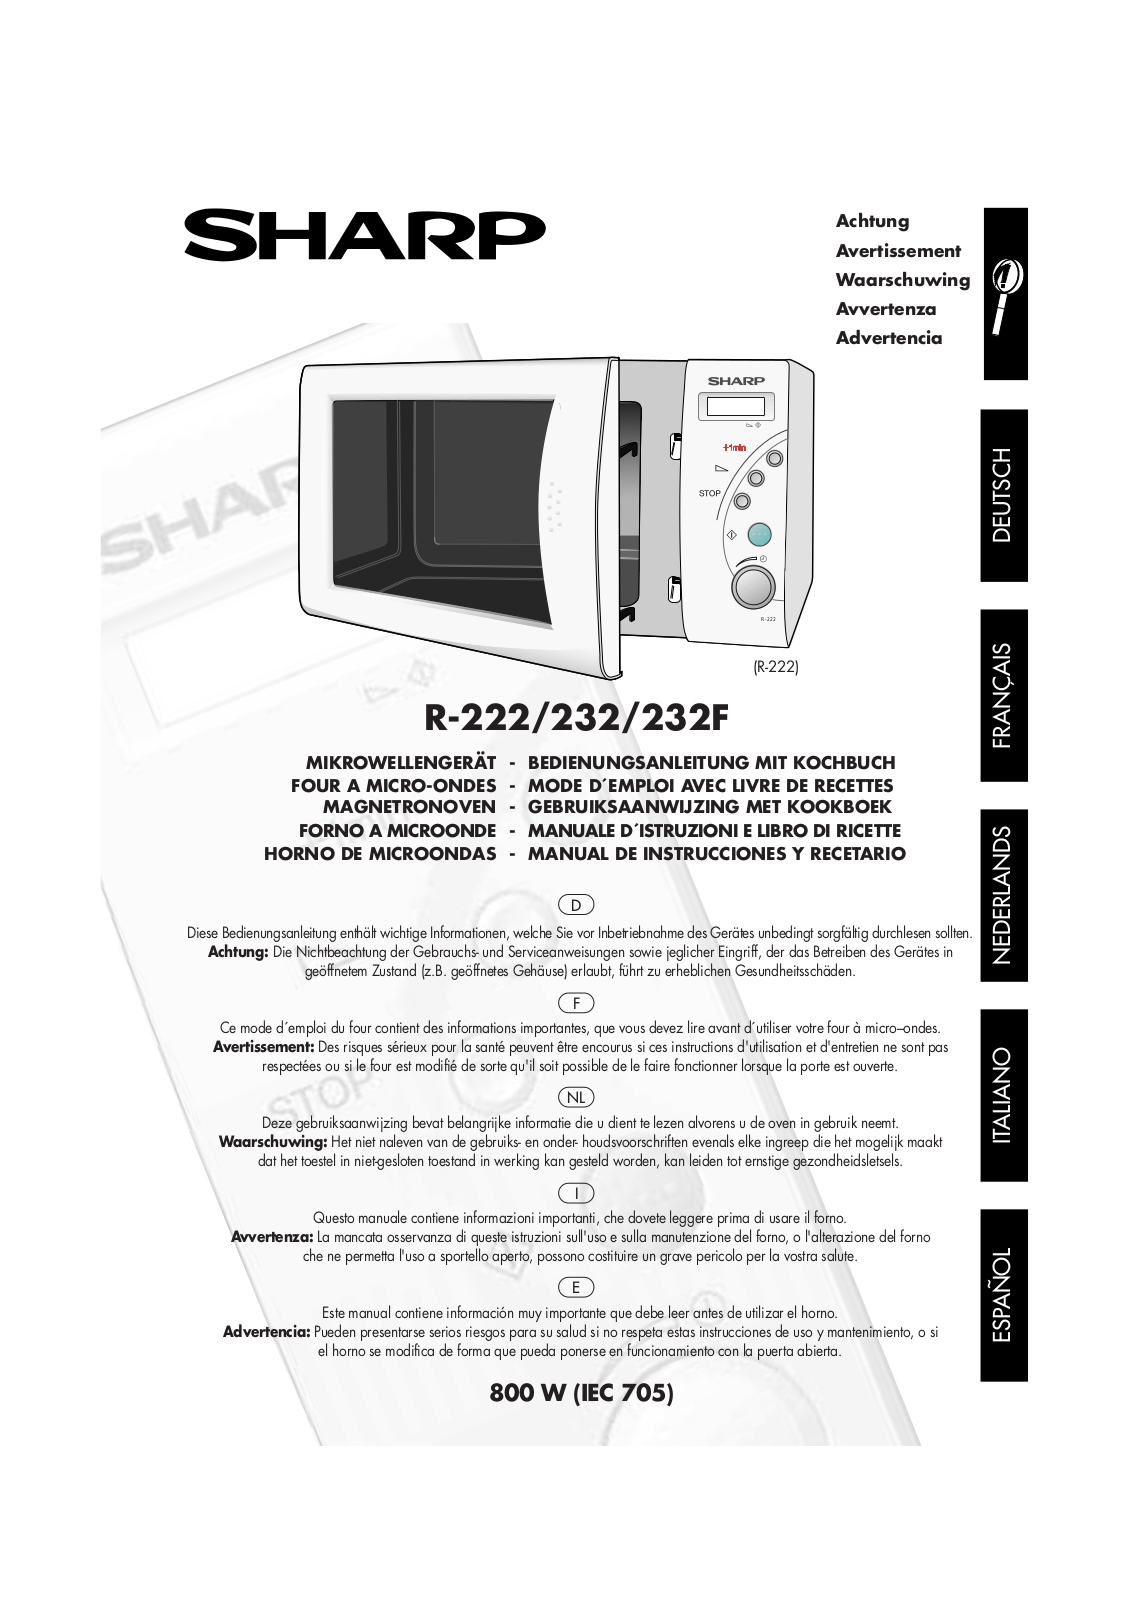 SHARP R-222, R-232F User Manual